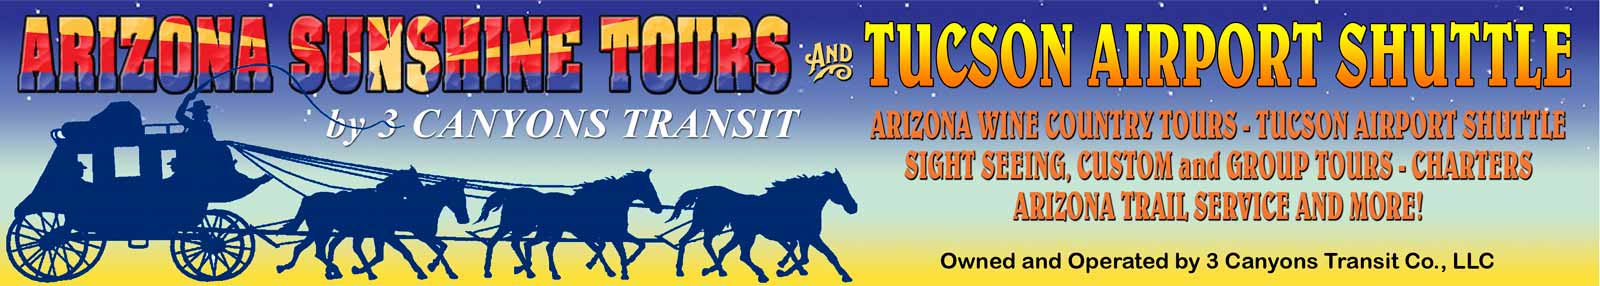 Arizona Sunshine Tours - Tucson Airport Shuttle - Arizona Wine Tours